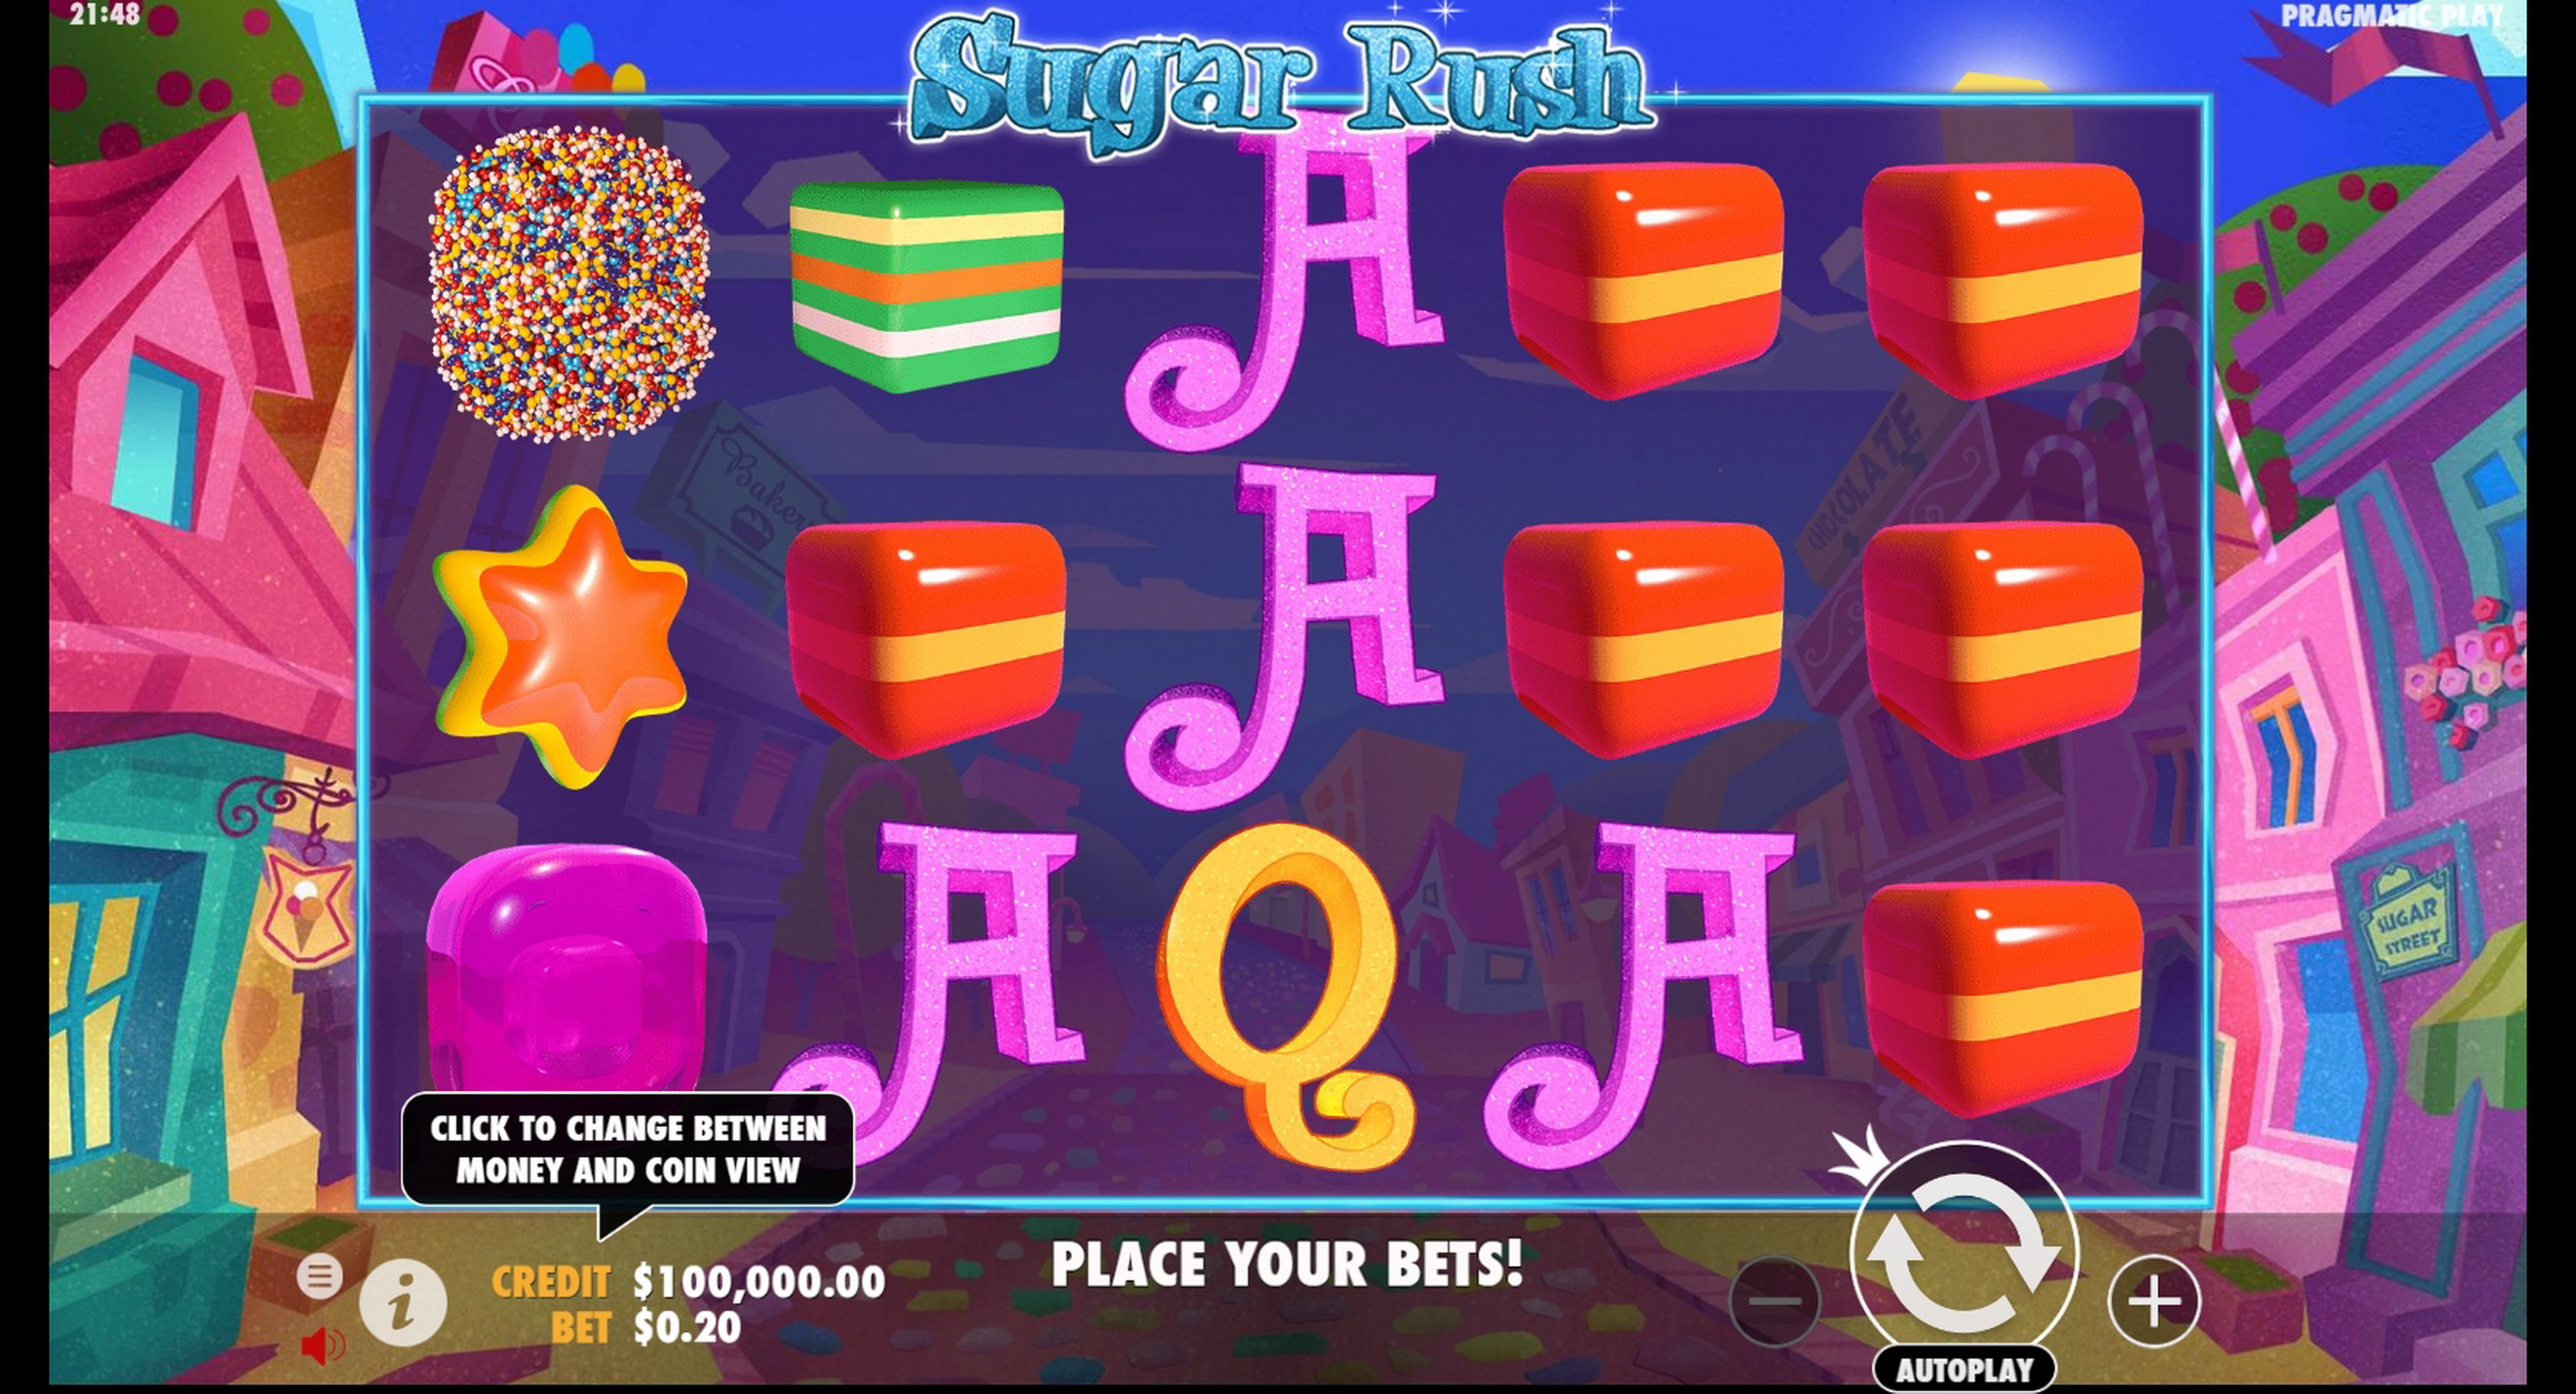 Reels in Sugar Rush Slot Game by Pragmatic Play